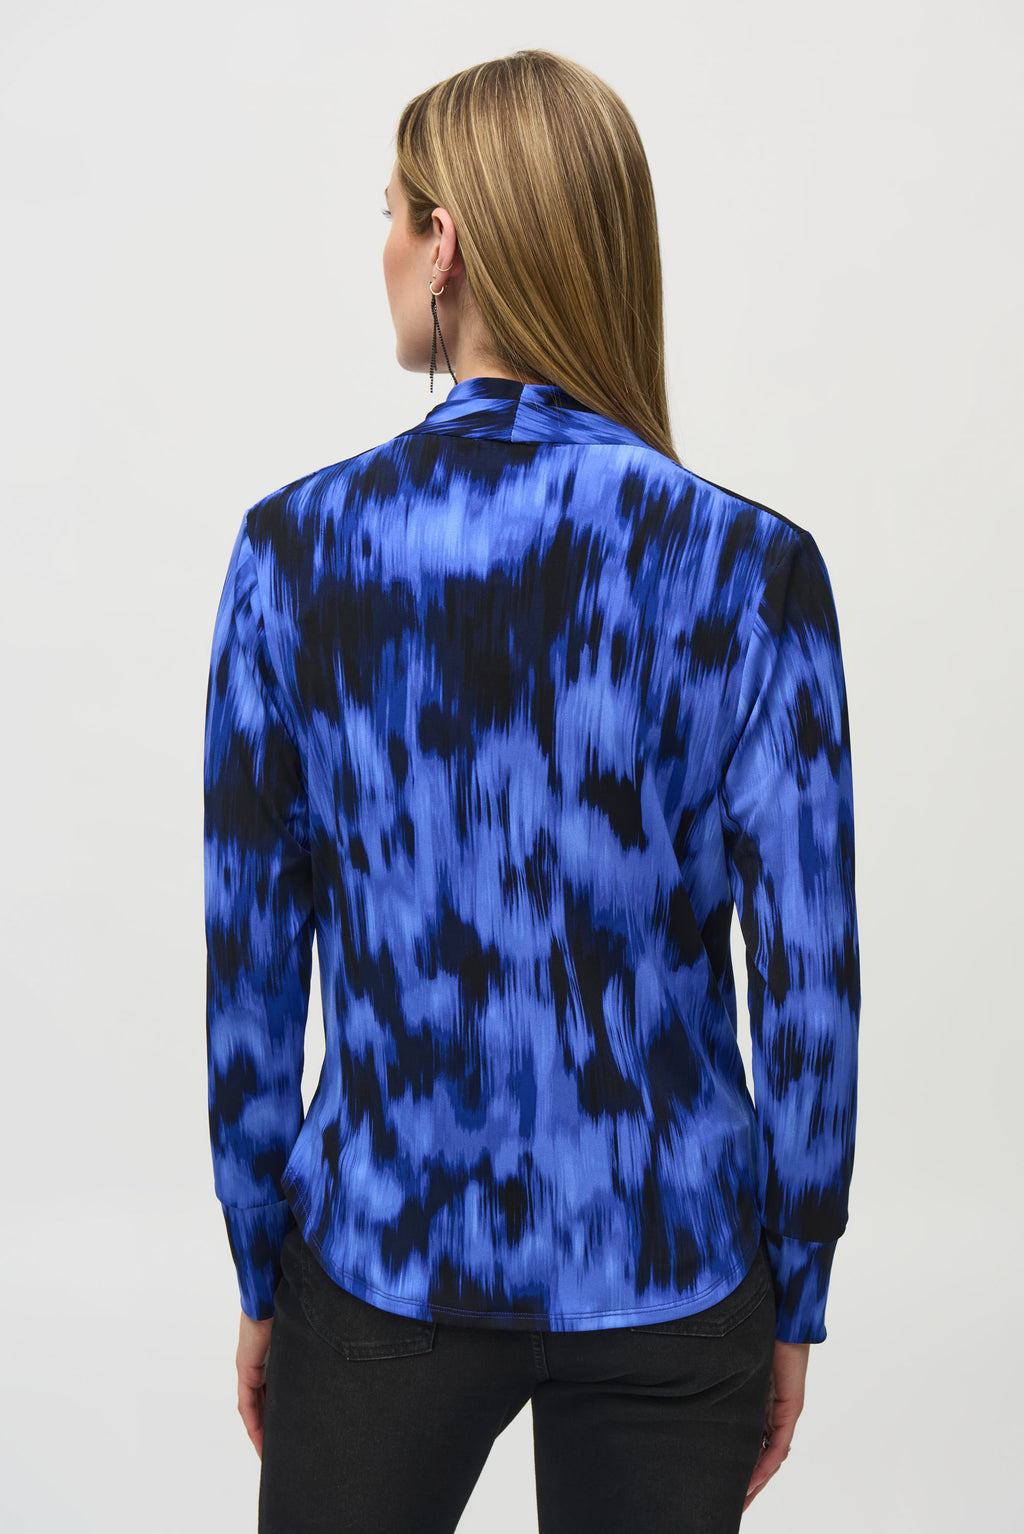 Joseph Ribkoff Royal Sapphire/Multi Abstract Print Wrap Top Style 244075